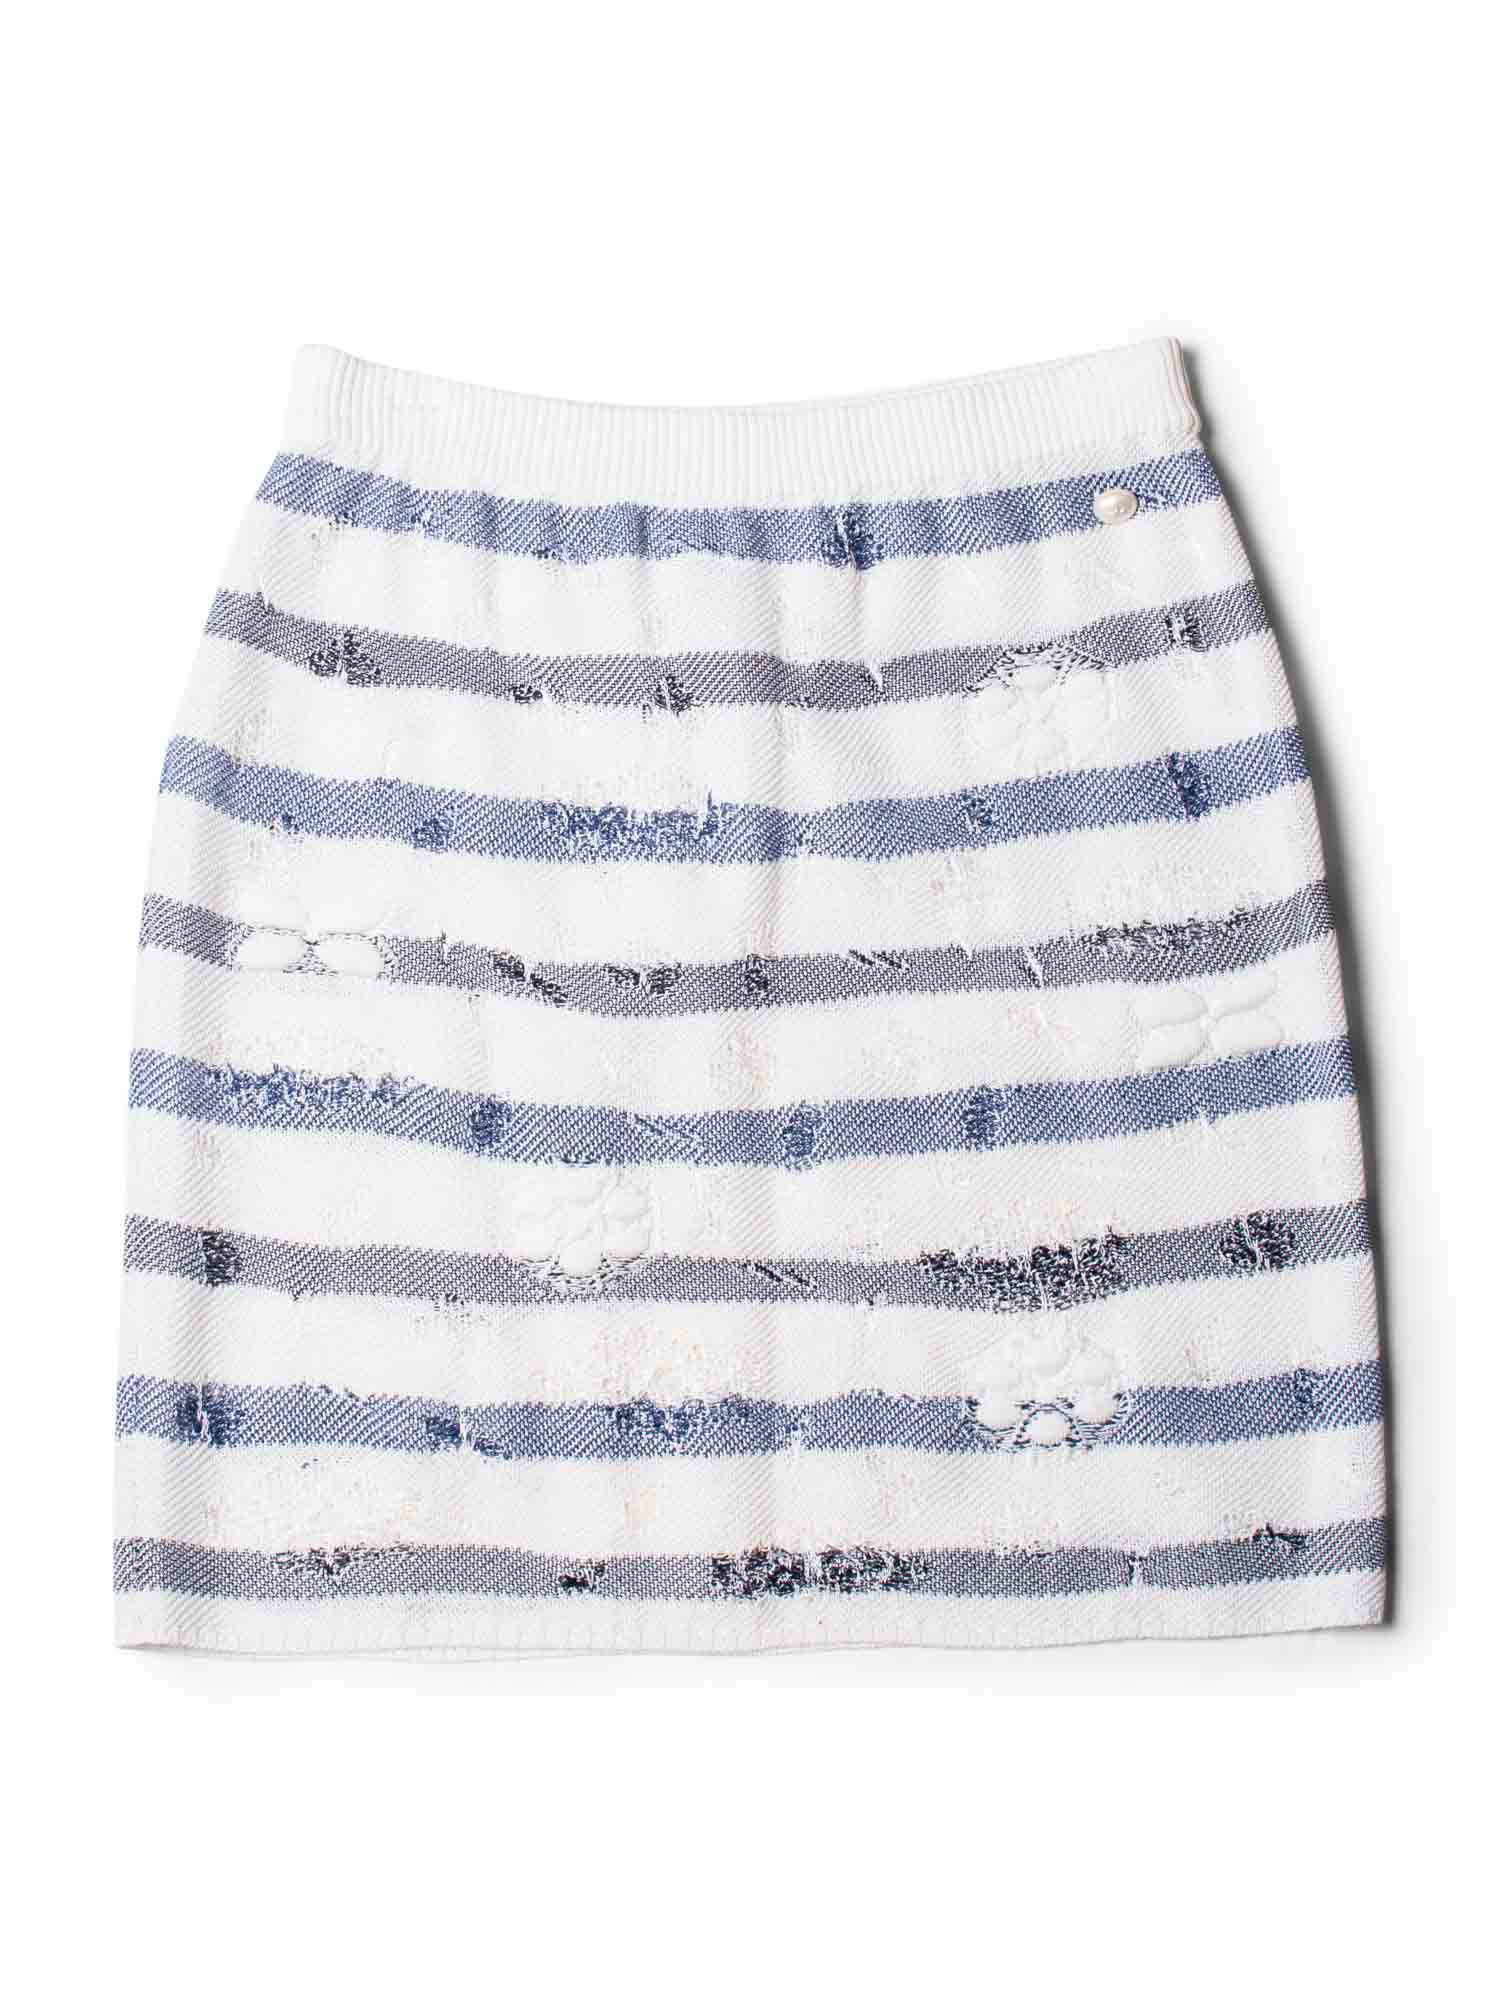 CHANEL CC Logo Striped Knit Distressed Camellia Skirt White Navy Blue-designer resale